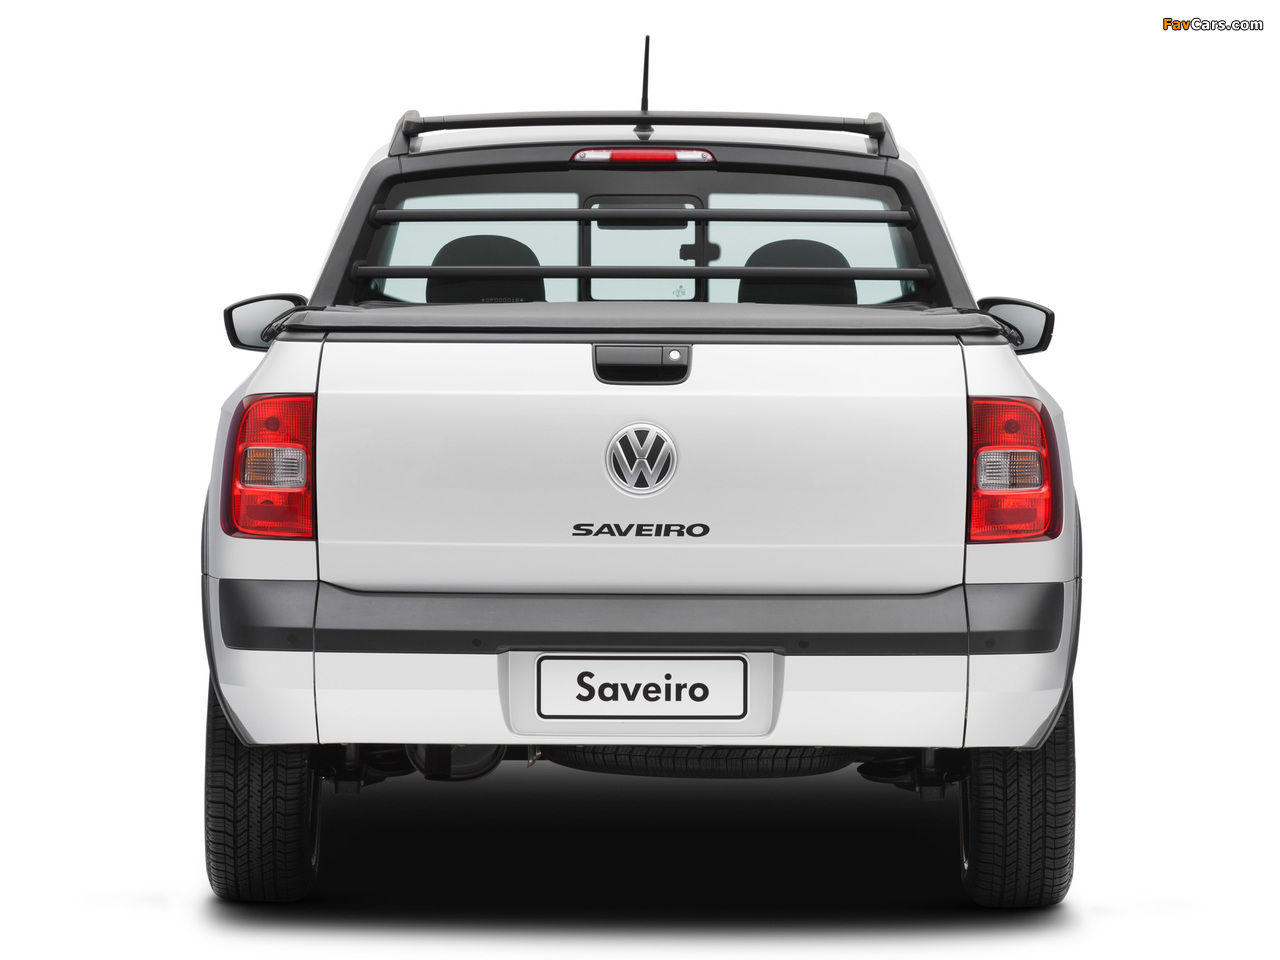 Volkswagen Saveiro Trooper Cabine Estendida (V) 2009 images (1280 x 960)